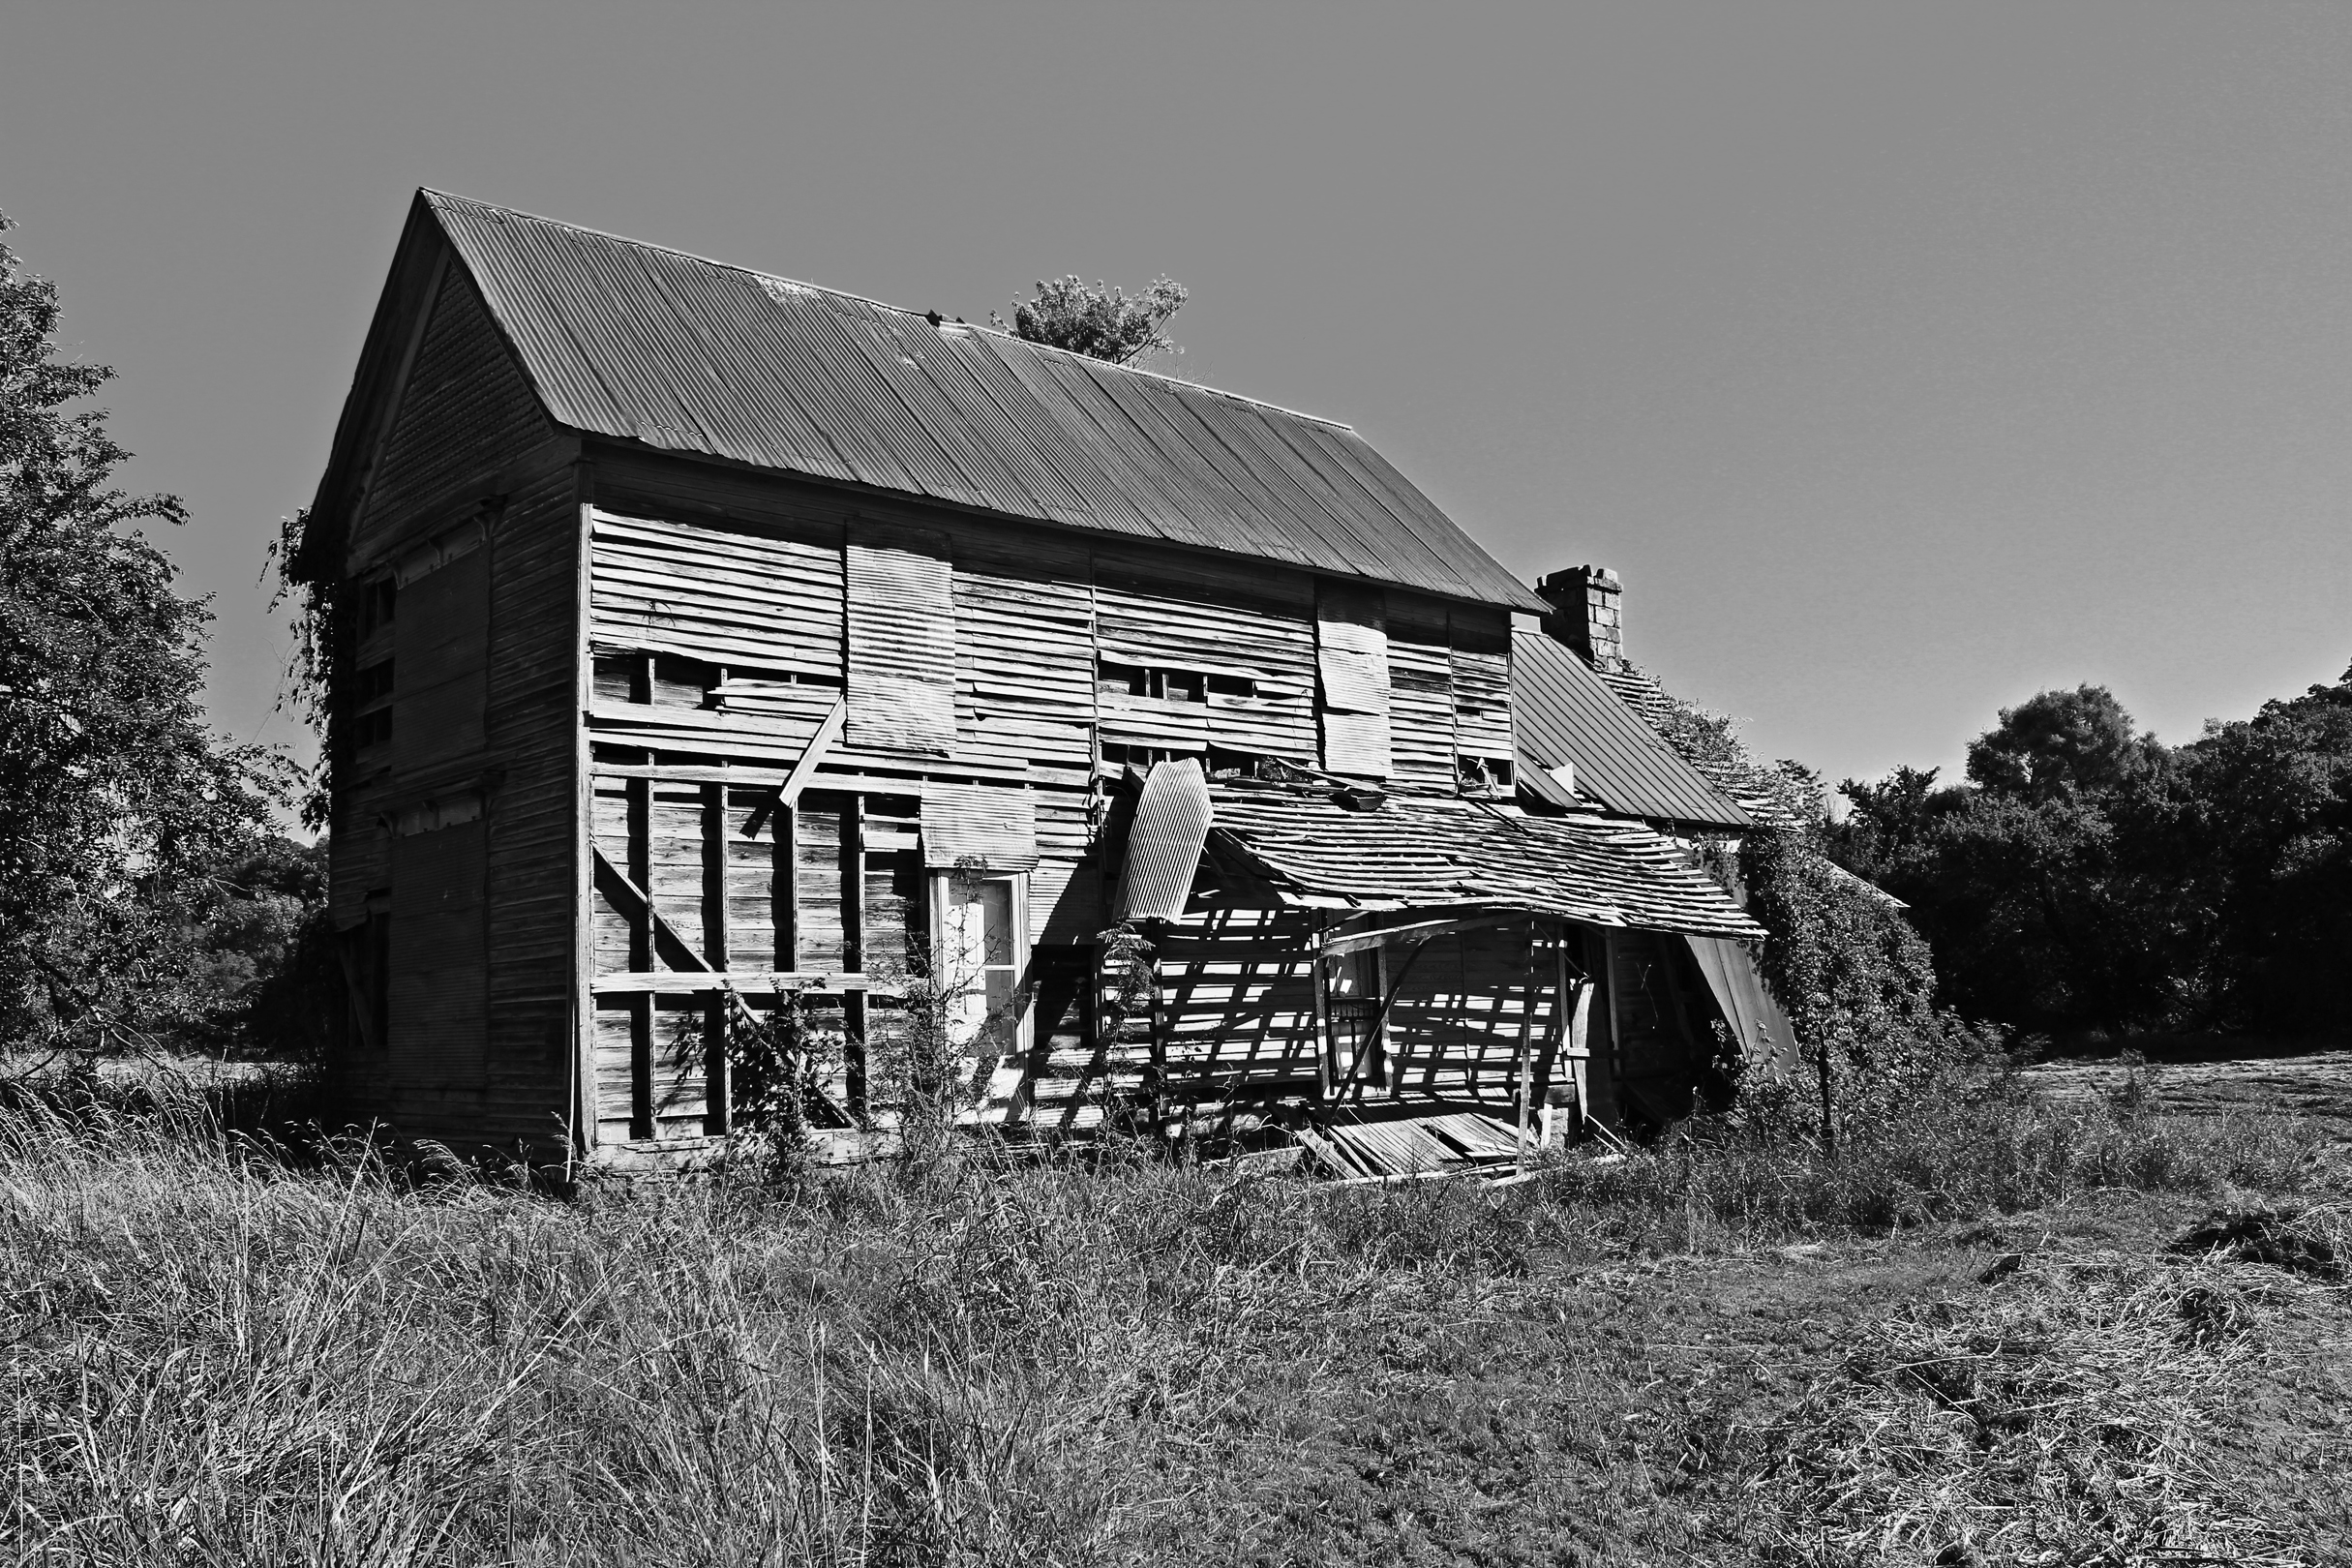    Abandoned Farm House  , Cane Hill, AR, 2013. B&amp;W HDR digital image. 